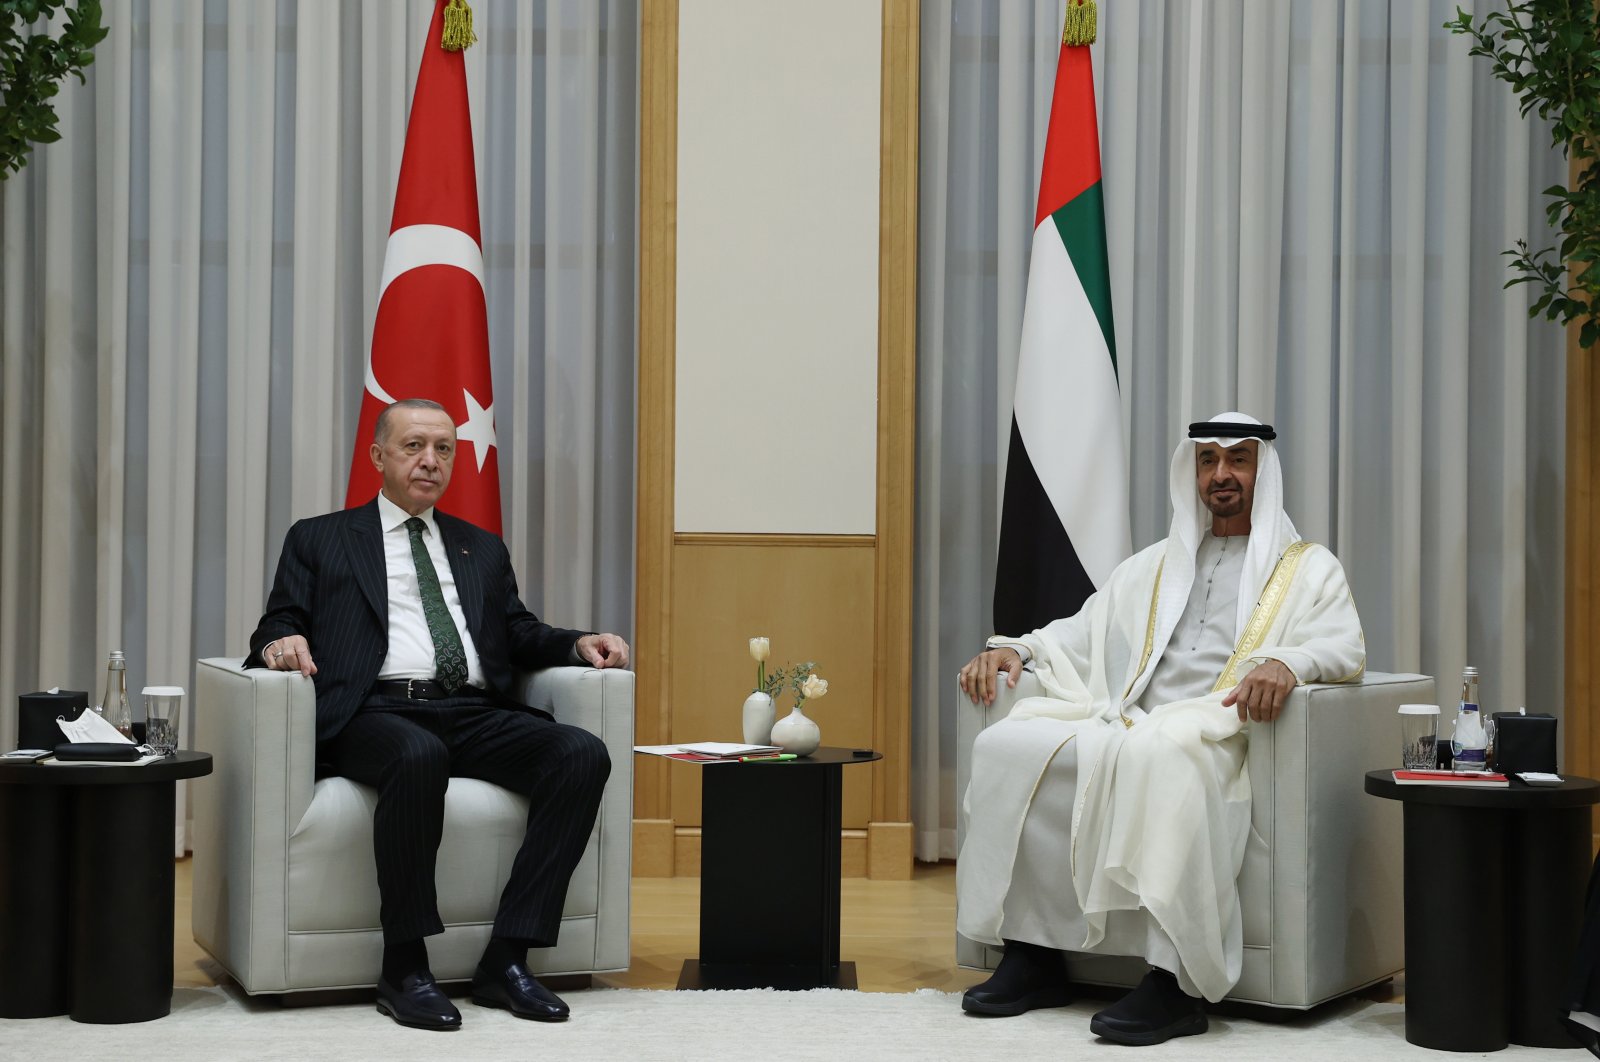 President Recep Tayyip Erdoğan and Abu Dhabi Crown Prince Sheikh Mohammed bin Zayed Al Nahyan (R) during their meeting at the Qasr Al Watan palace in Abu Dhabi, UAE, Feb. 14, 2022. (EPA Photo)